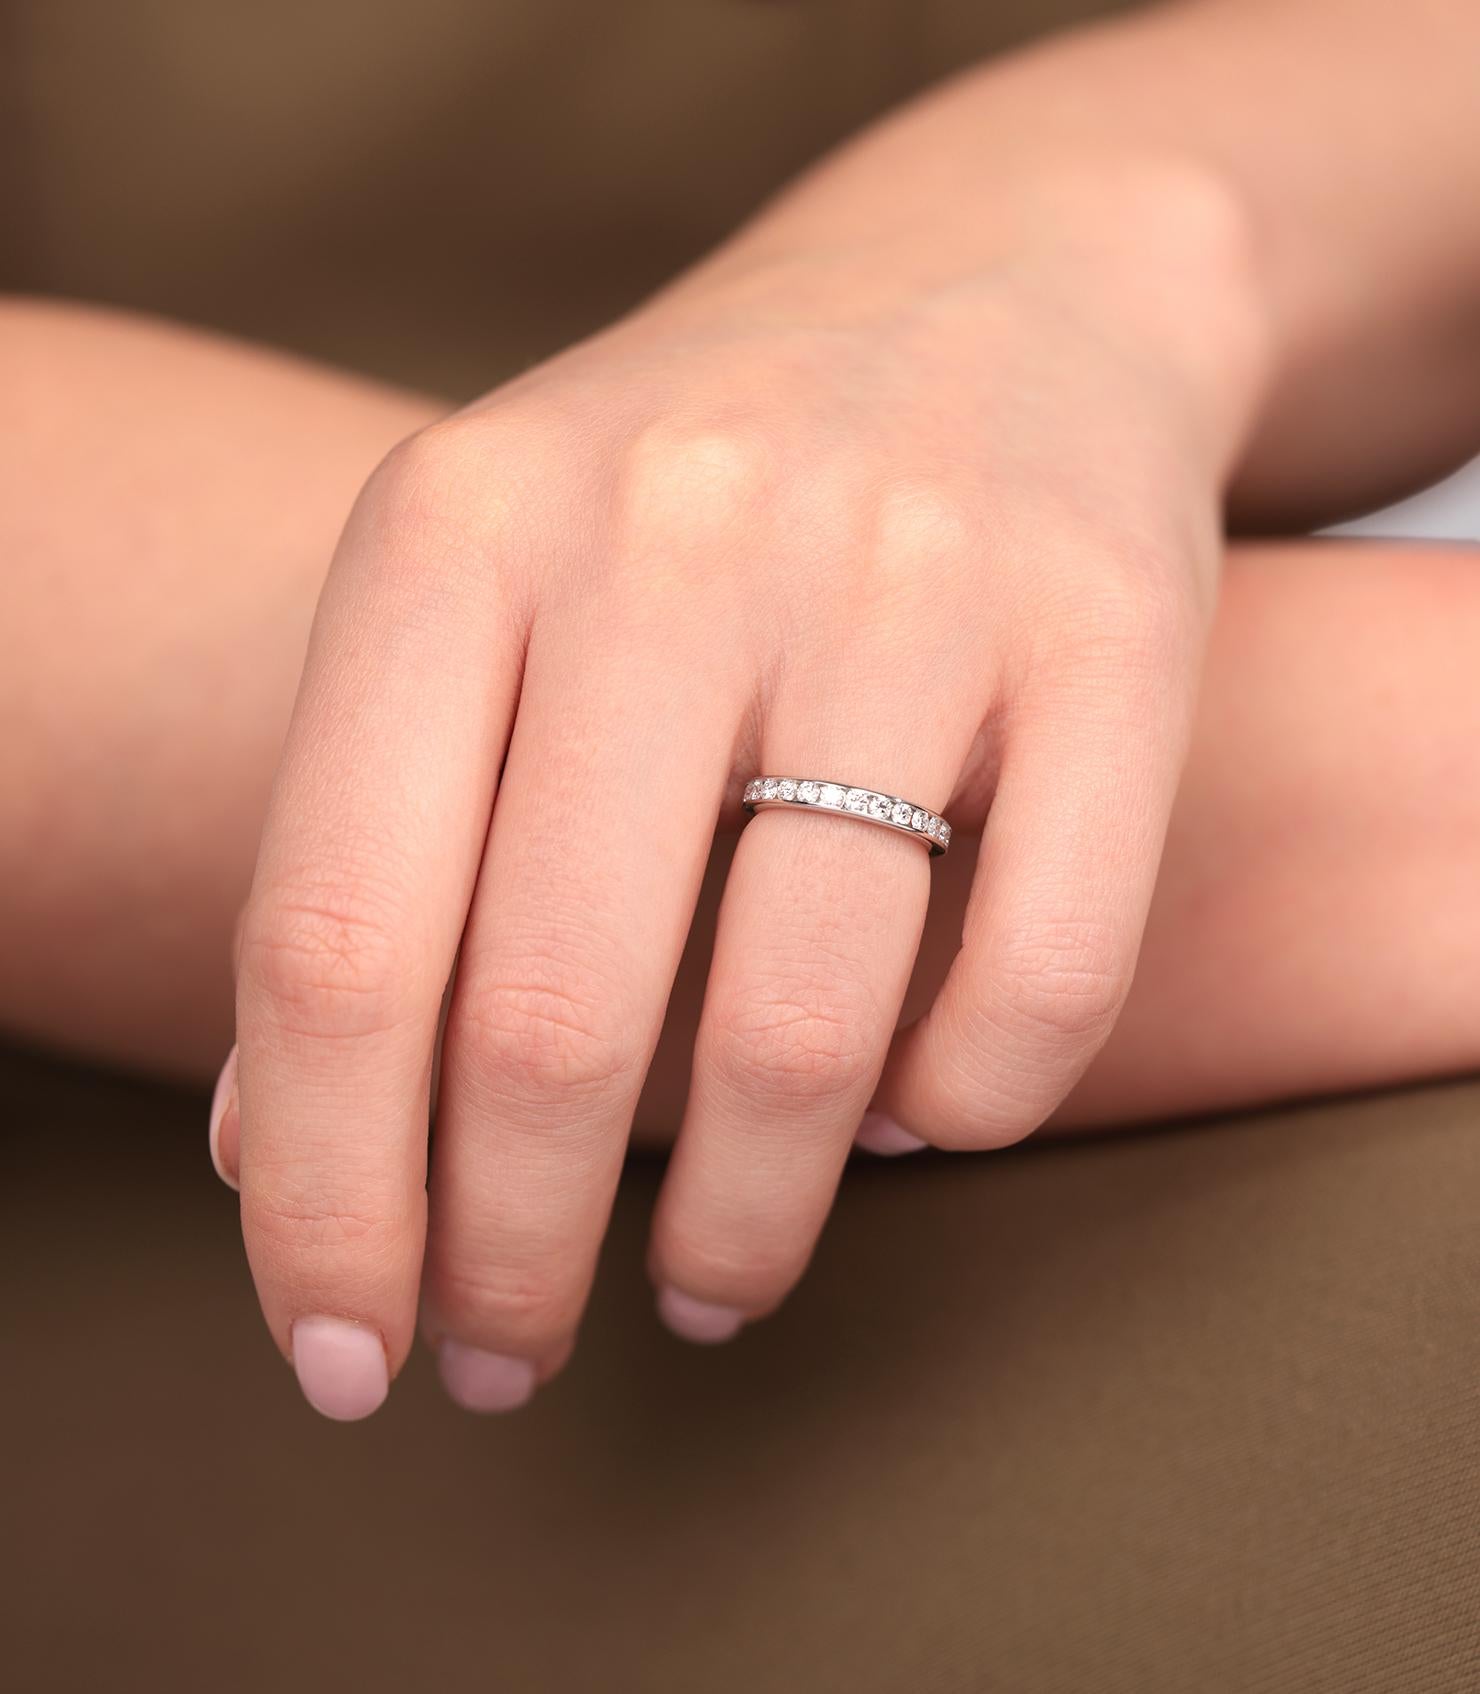 Tiffany & Co. Brilliant Cut Diamond Platinum Full Eternity Ring

Brand- Tiffany & Co.
Model- Full Eternity Ring
Product Type- Ring
Accompanied By- Tiffany & Co. Box
Material(s)- Platinum
Gemstone- Diamond
UK Ring Size- J
EU Ring Size- 49
US Ring